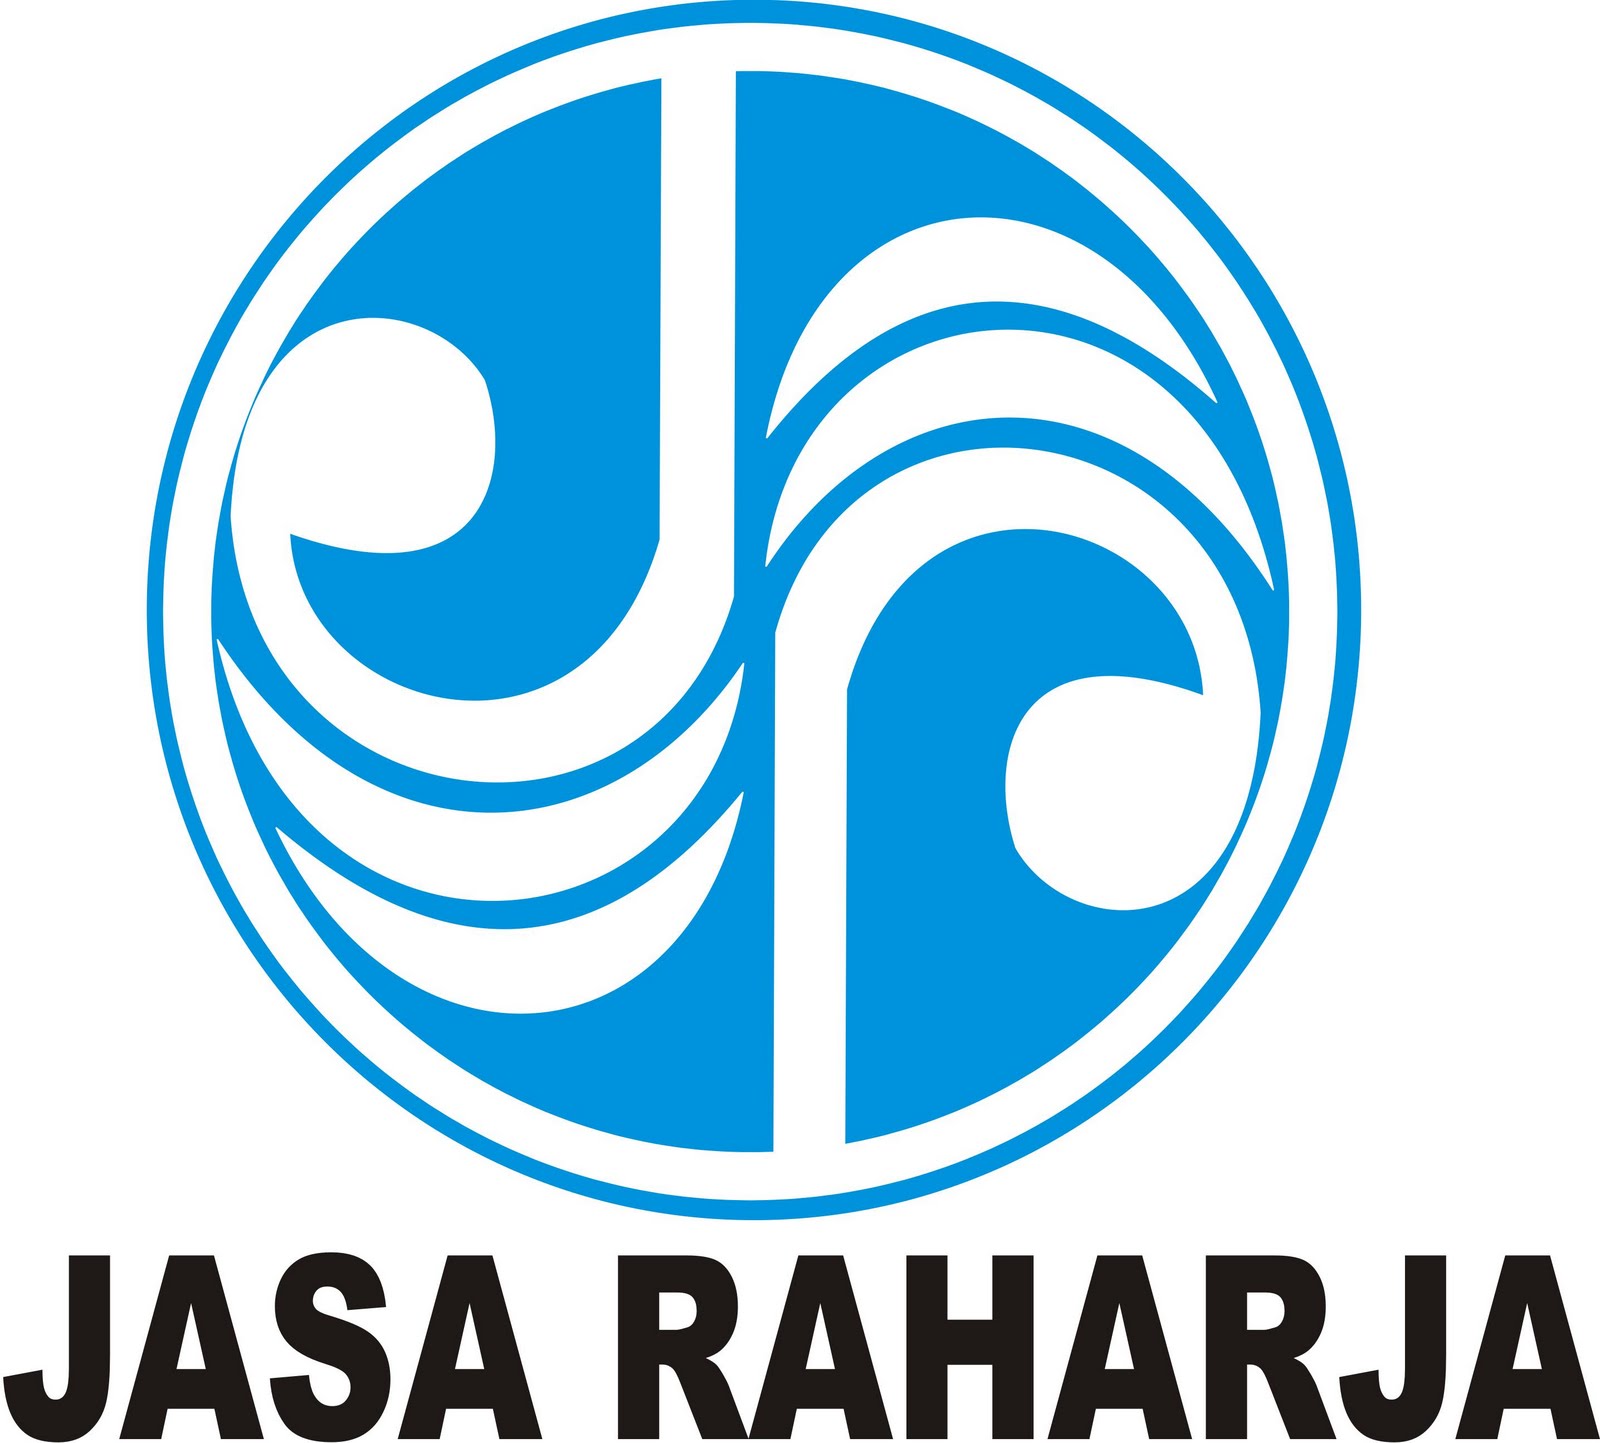  Logo Jasa Raharja Kumpulan Logo Indonesia